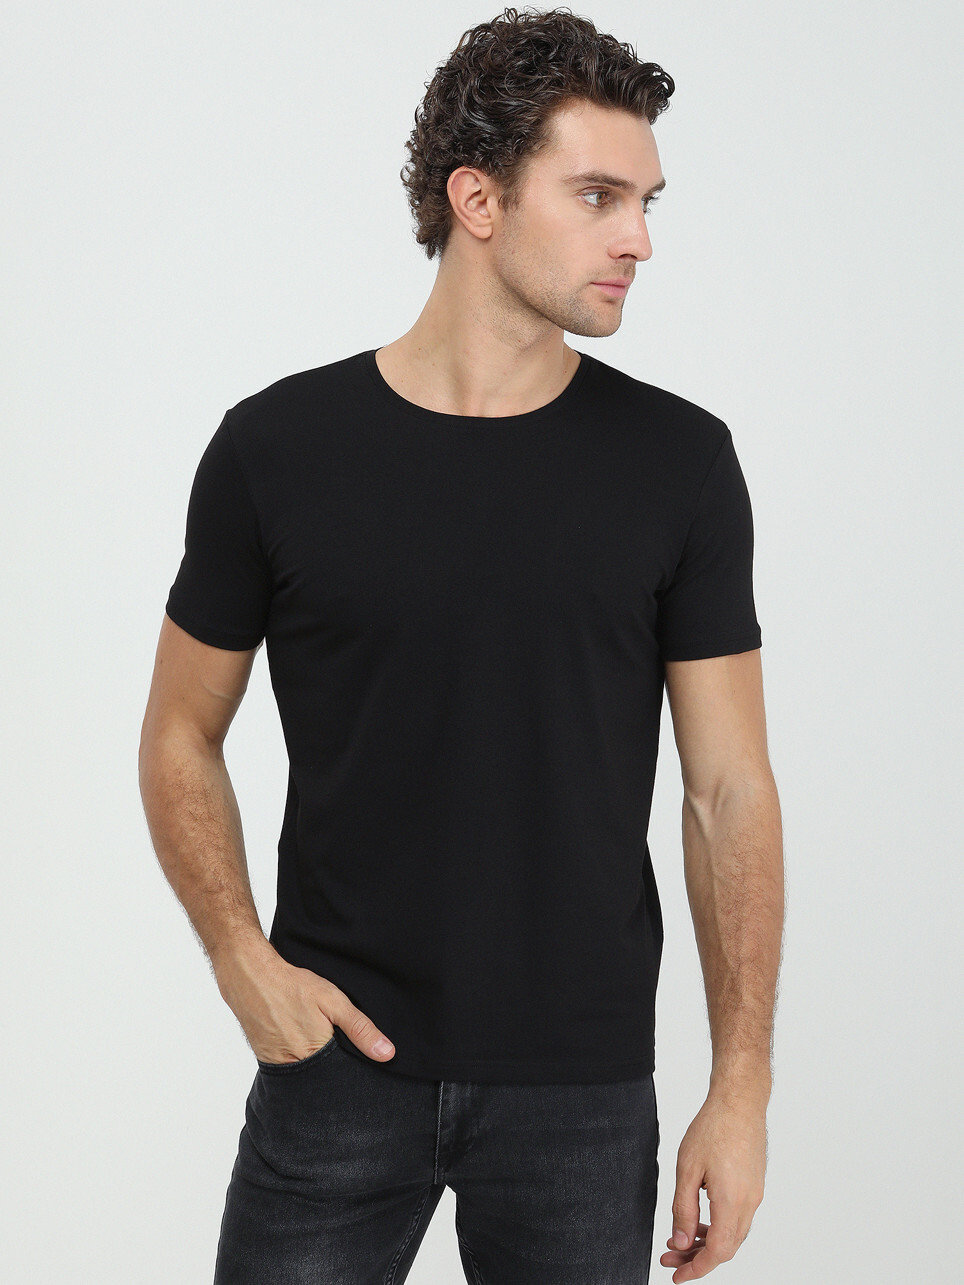 KİP - Siyah Pamuk Karışımlı T-Shirt (1)